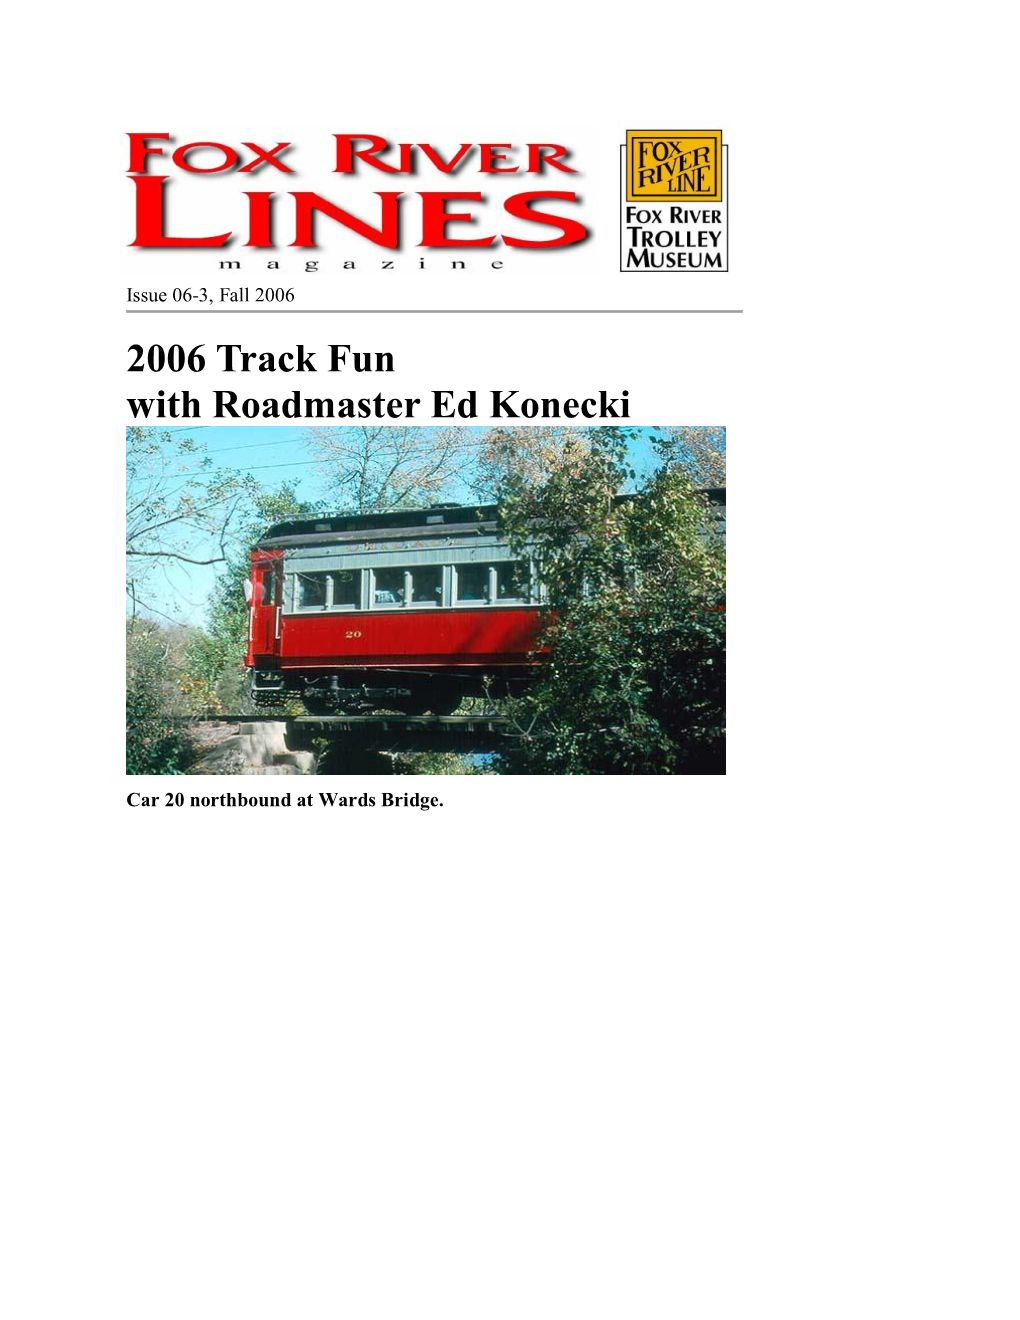 2006 Track Fun with Roadmaster Ed Konecki